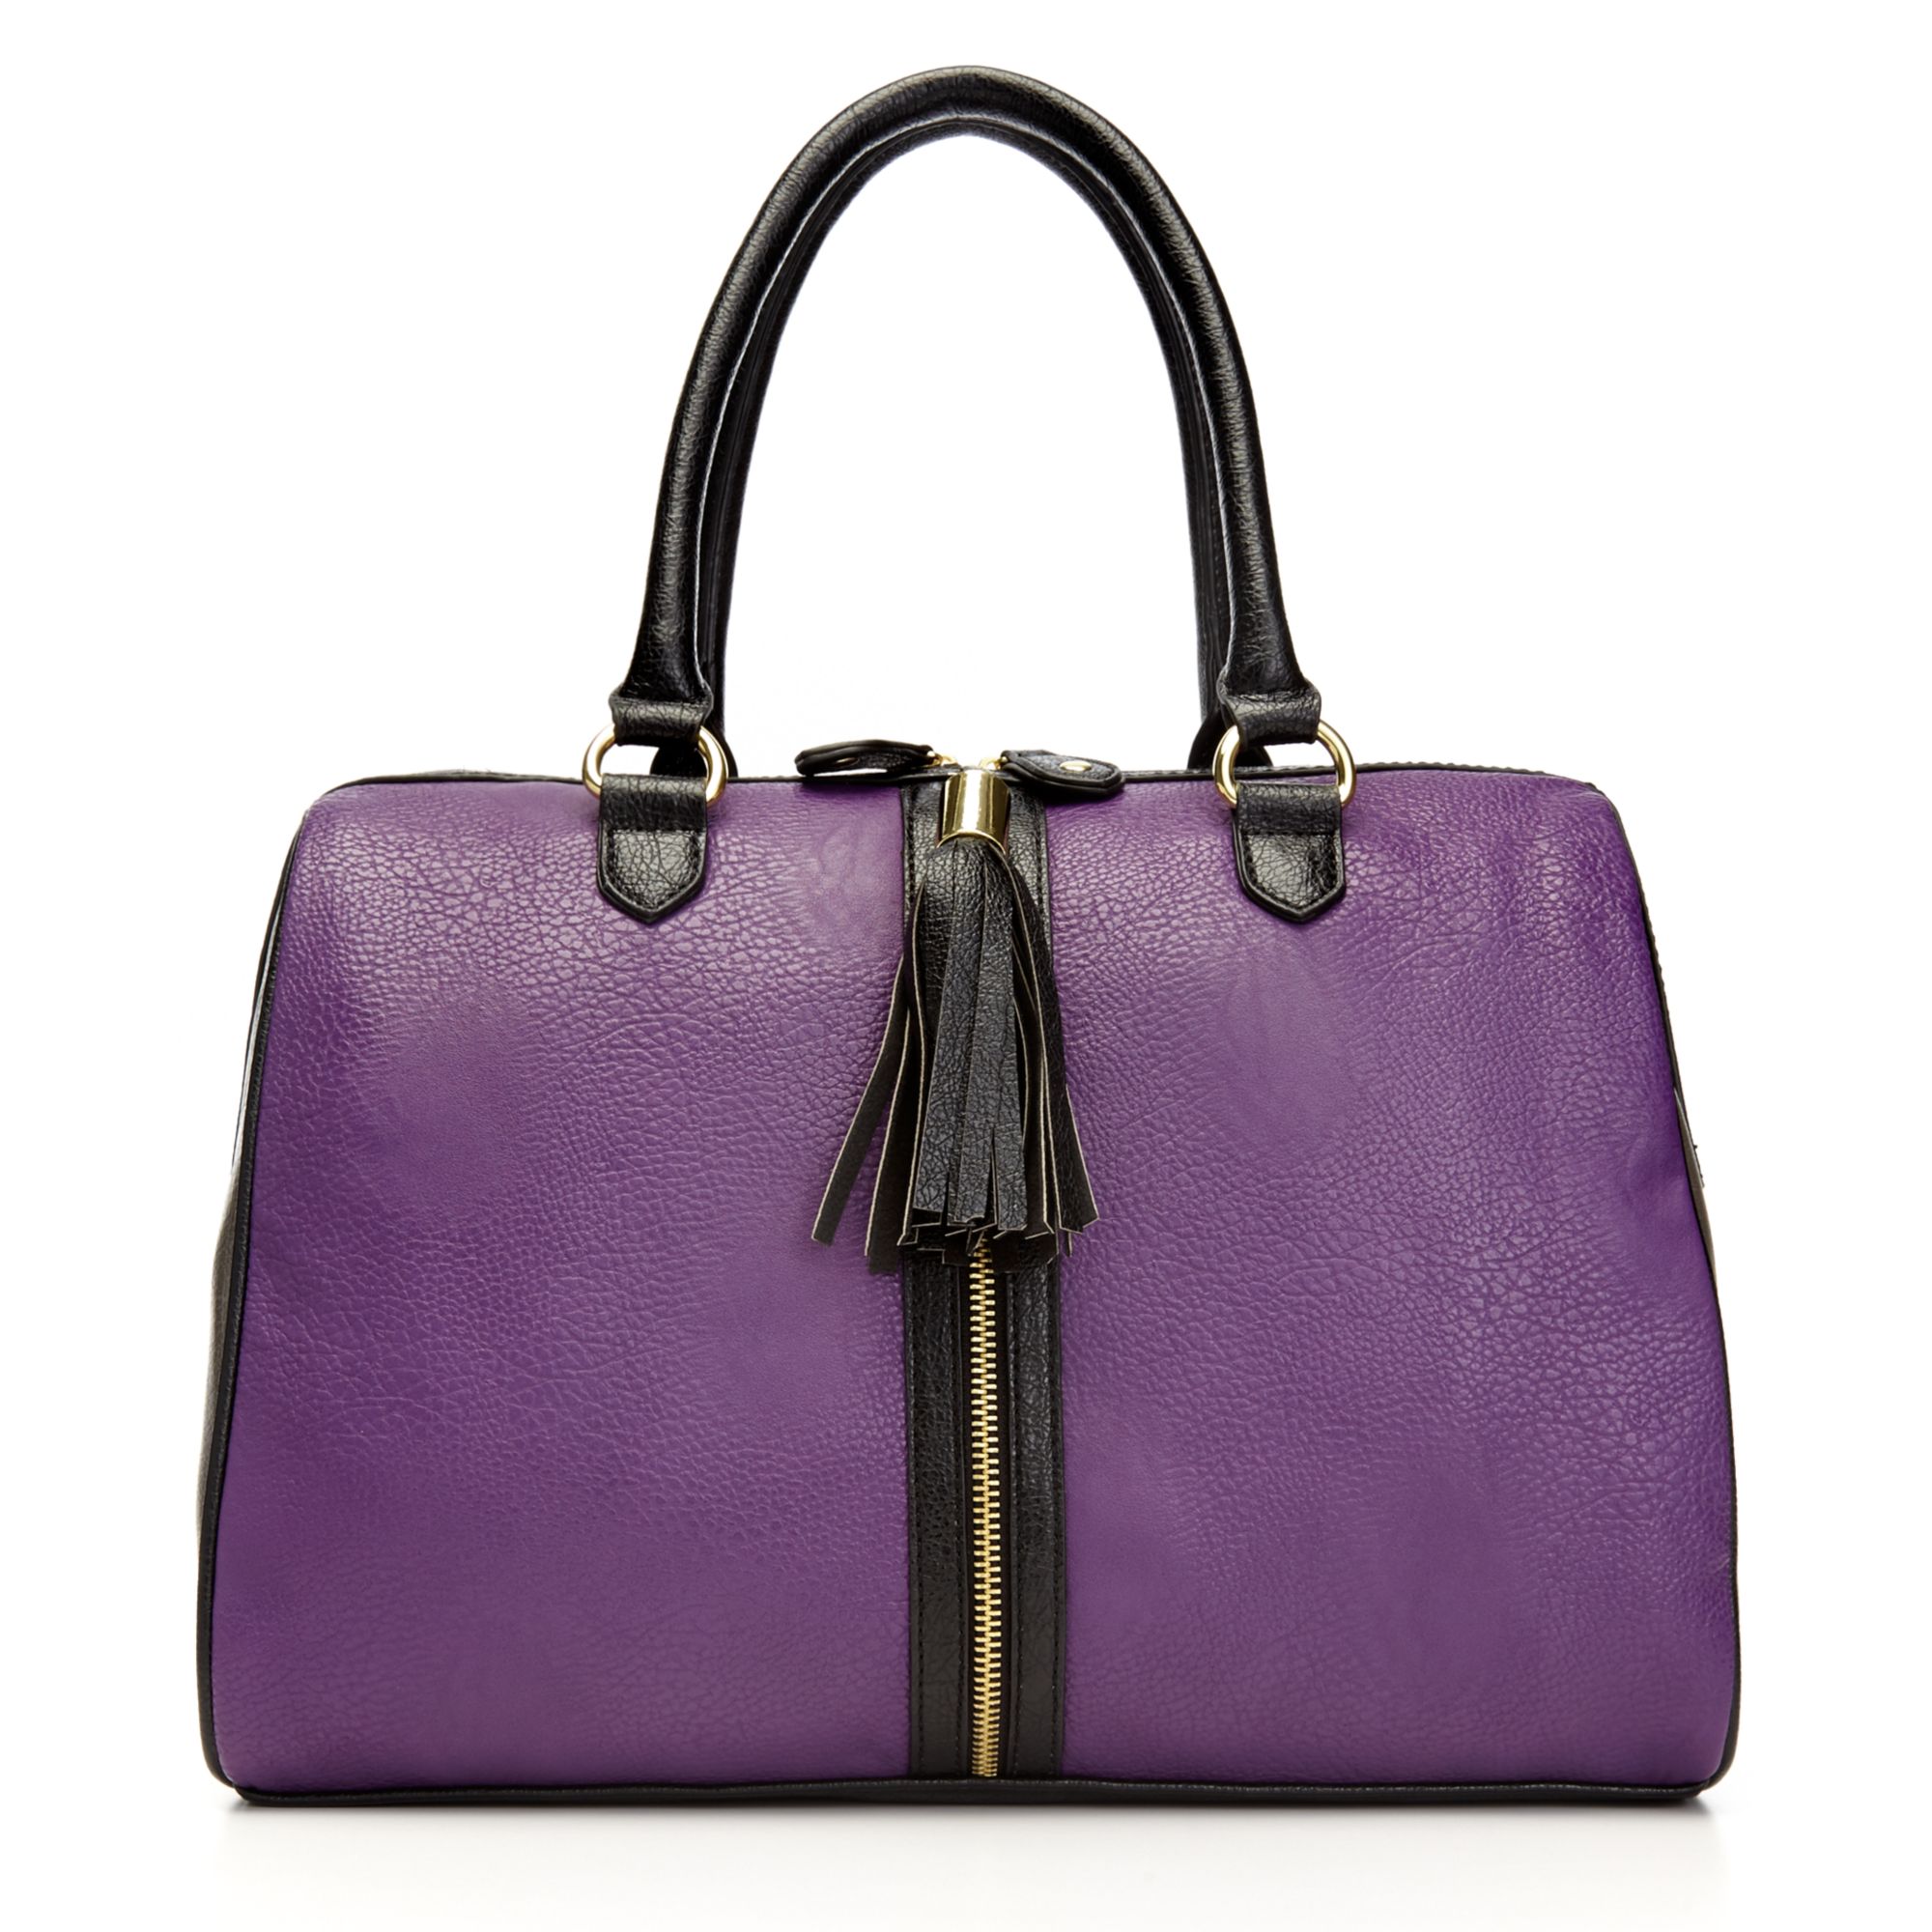 Steve Madden Handbag Bclare Satchel in Purple | Lyst